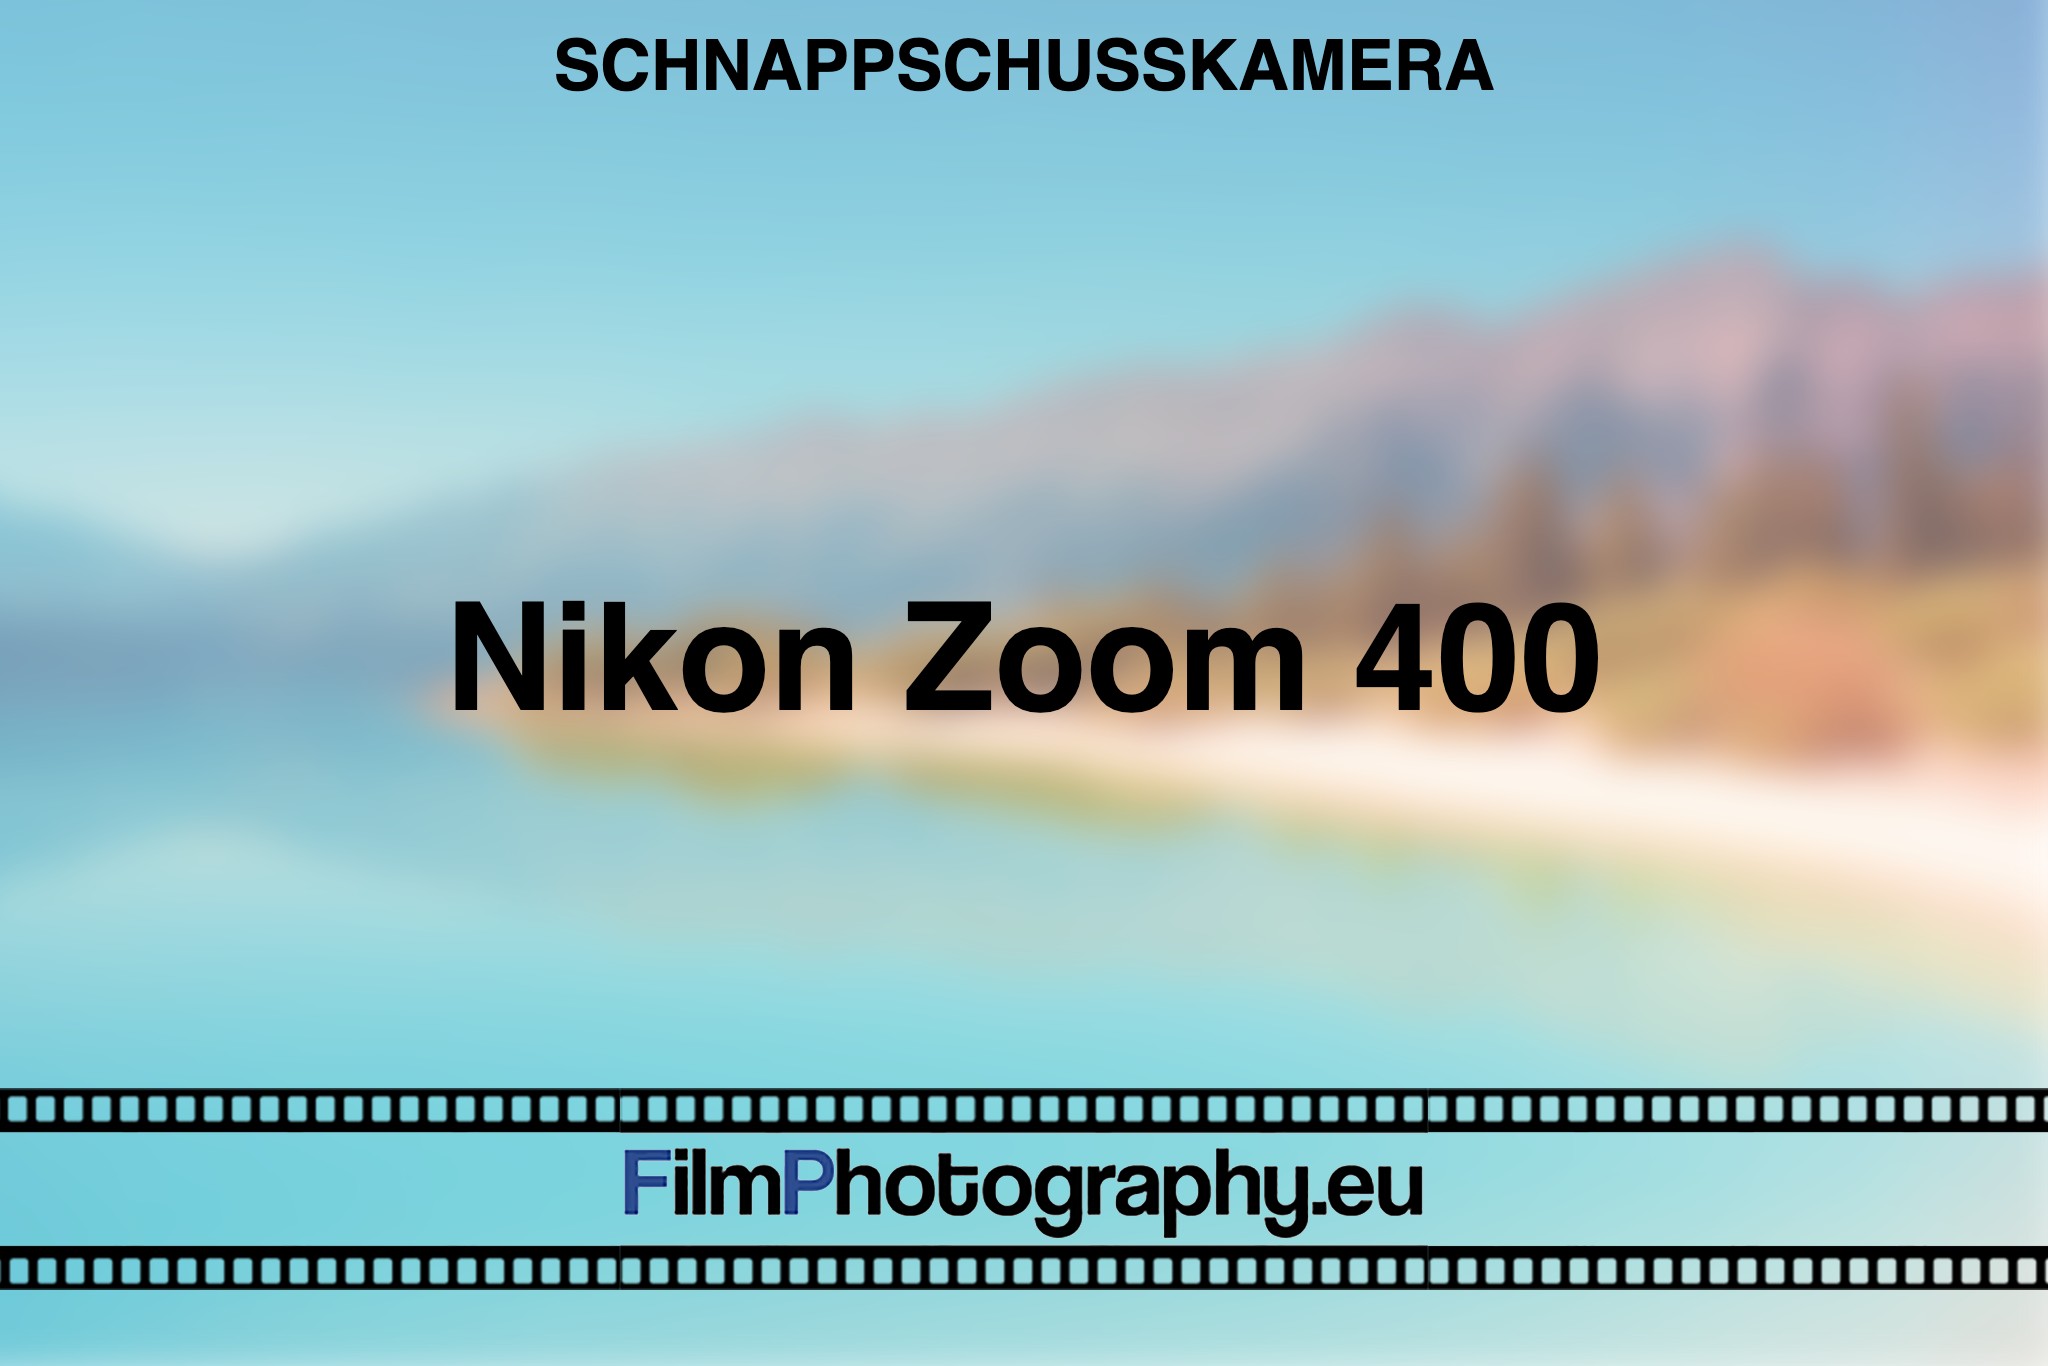 nikon-zoom-400-schnappschusskamera-bnv